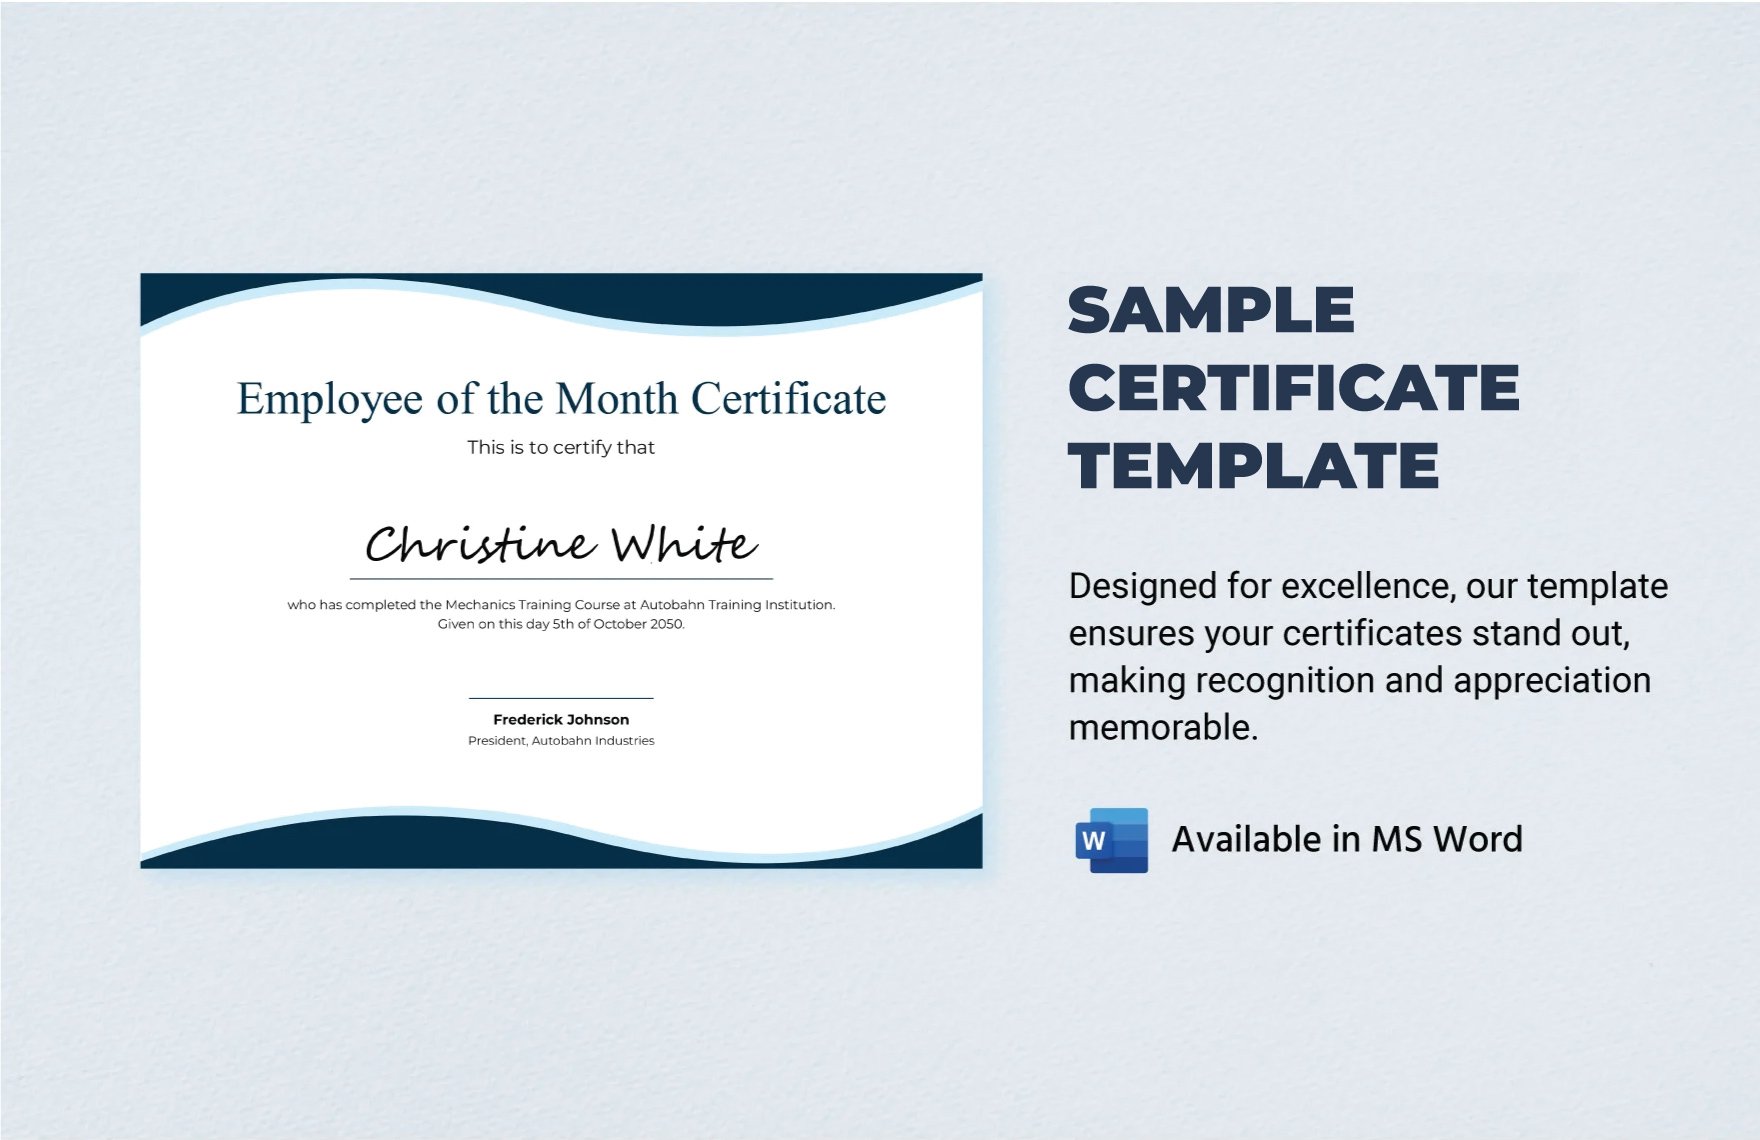 Free Sample Certificate Template in Word